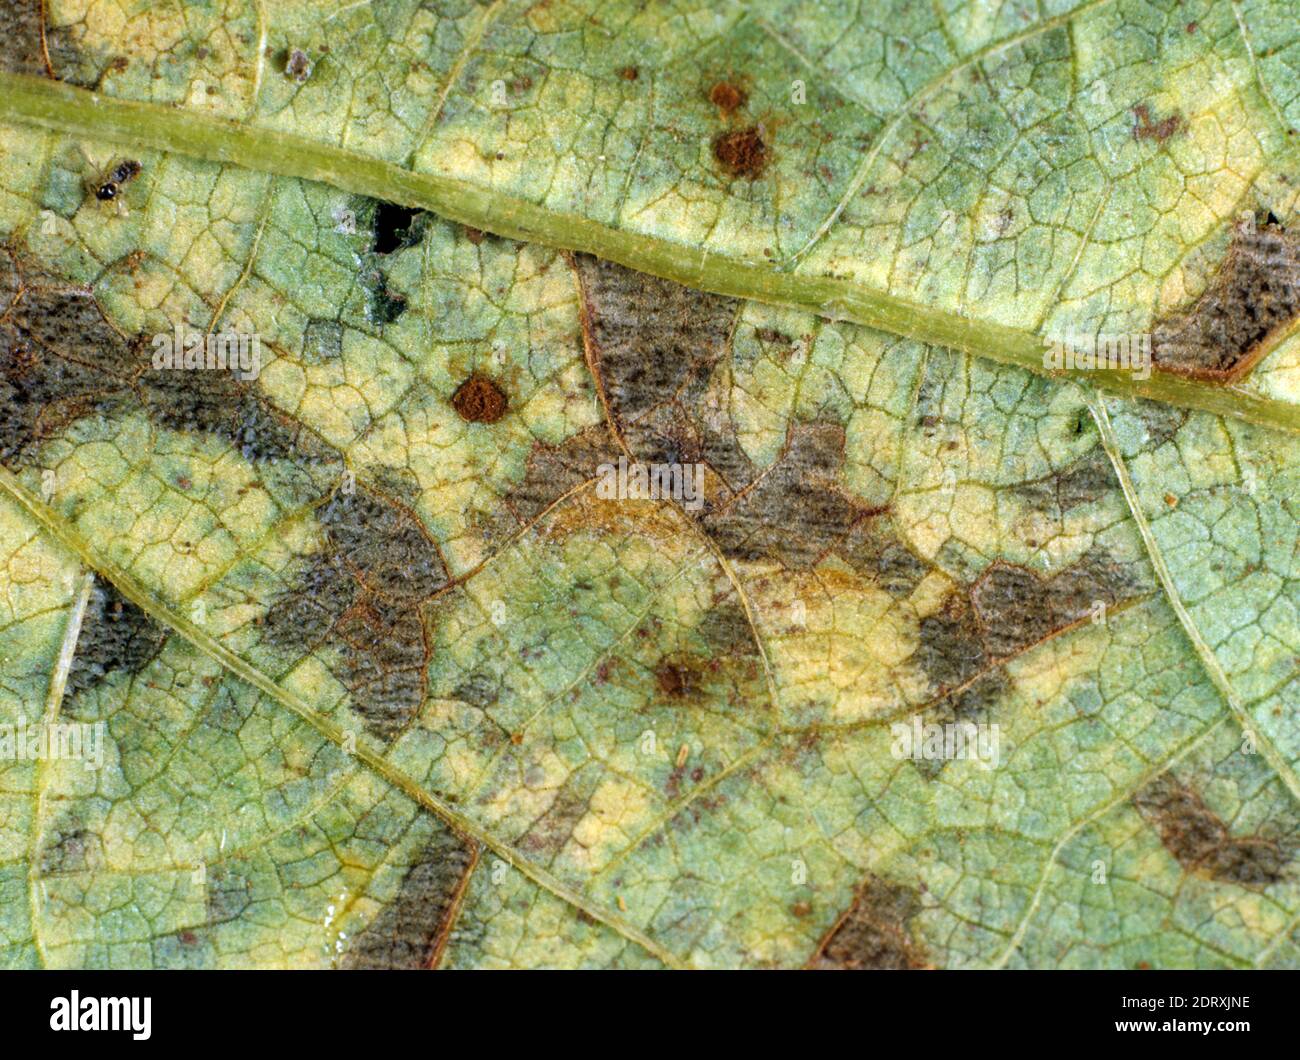 Angular leaf spot (Phaeoisariopsis griseola) lesions on green bean (Phaseolus vulgaris) leaf, Thailand Stock Photo